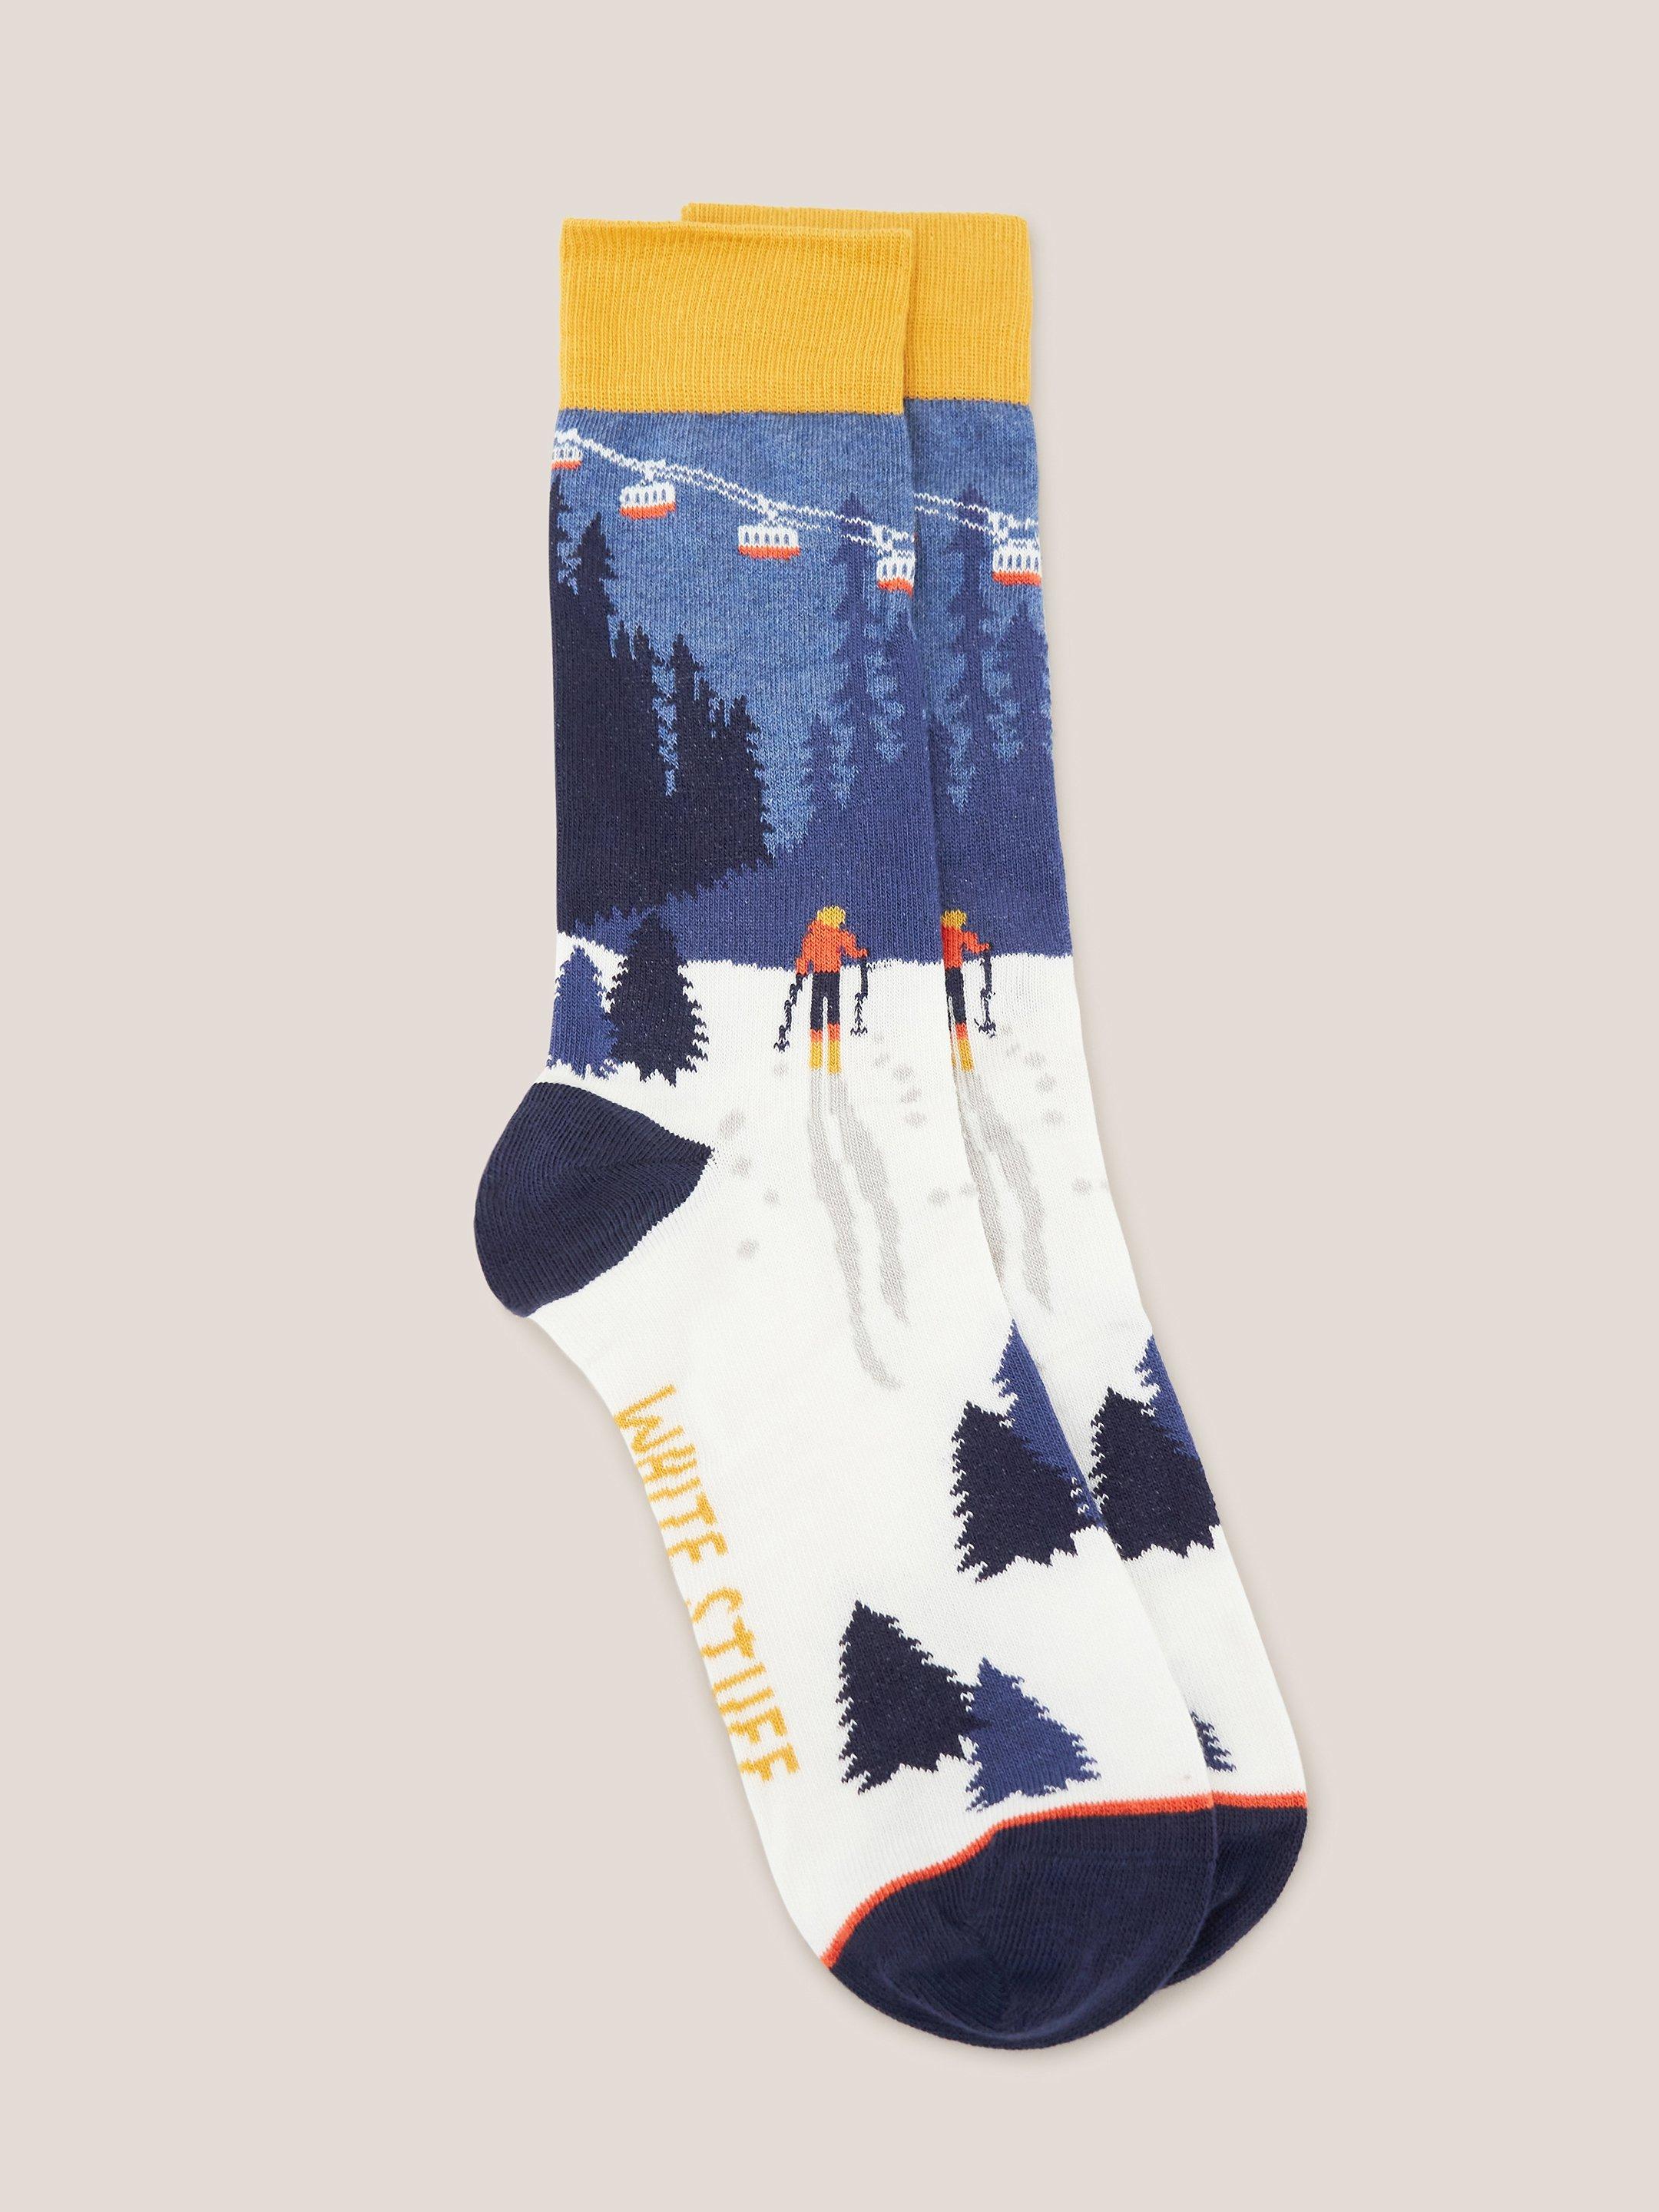 Ski Scenic Socks in a Cracker in BLUE MLT - FLAT FRONT